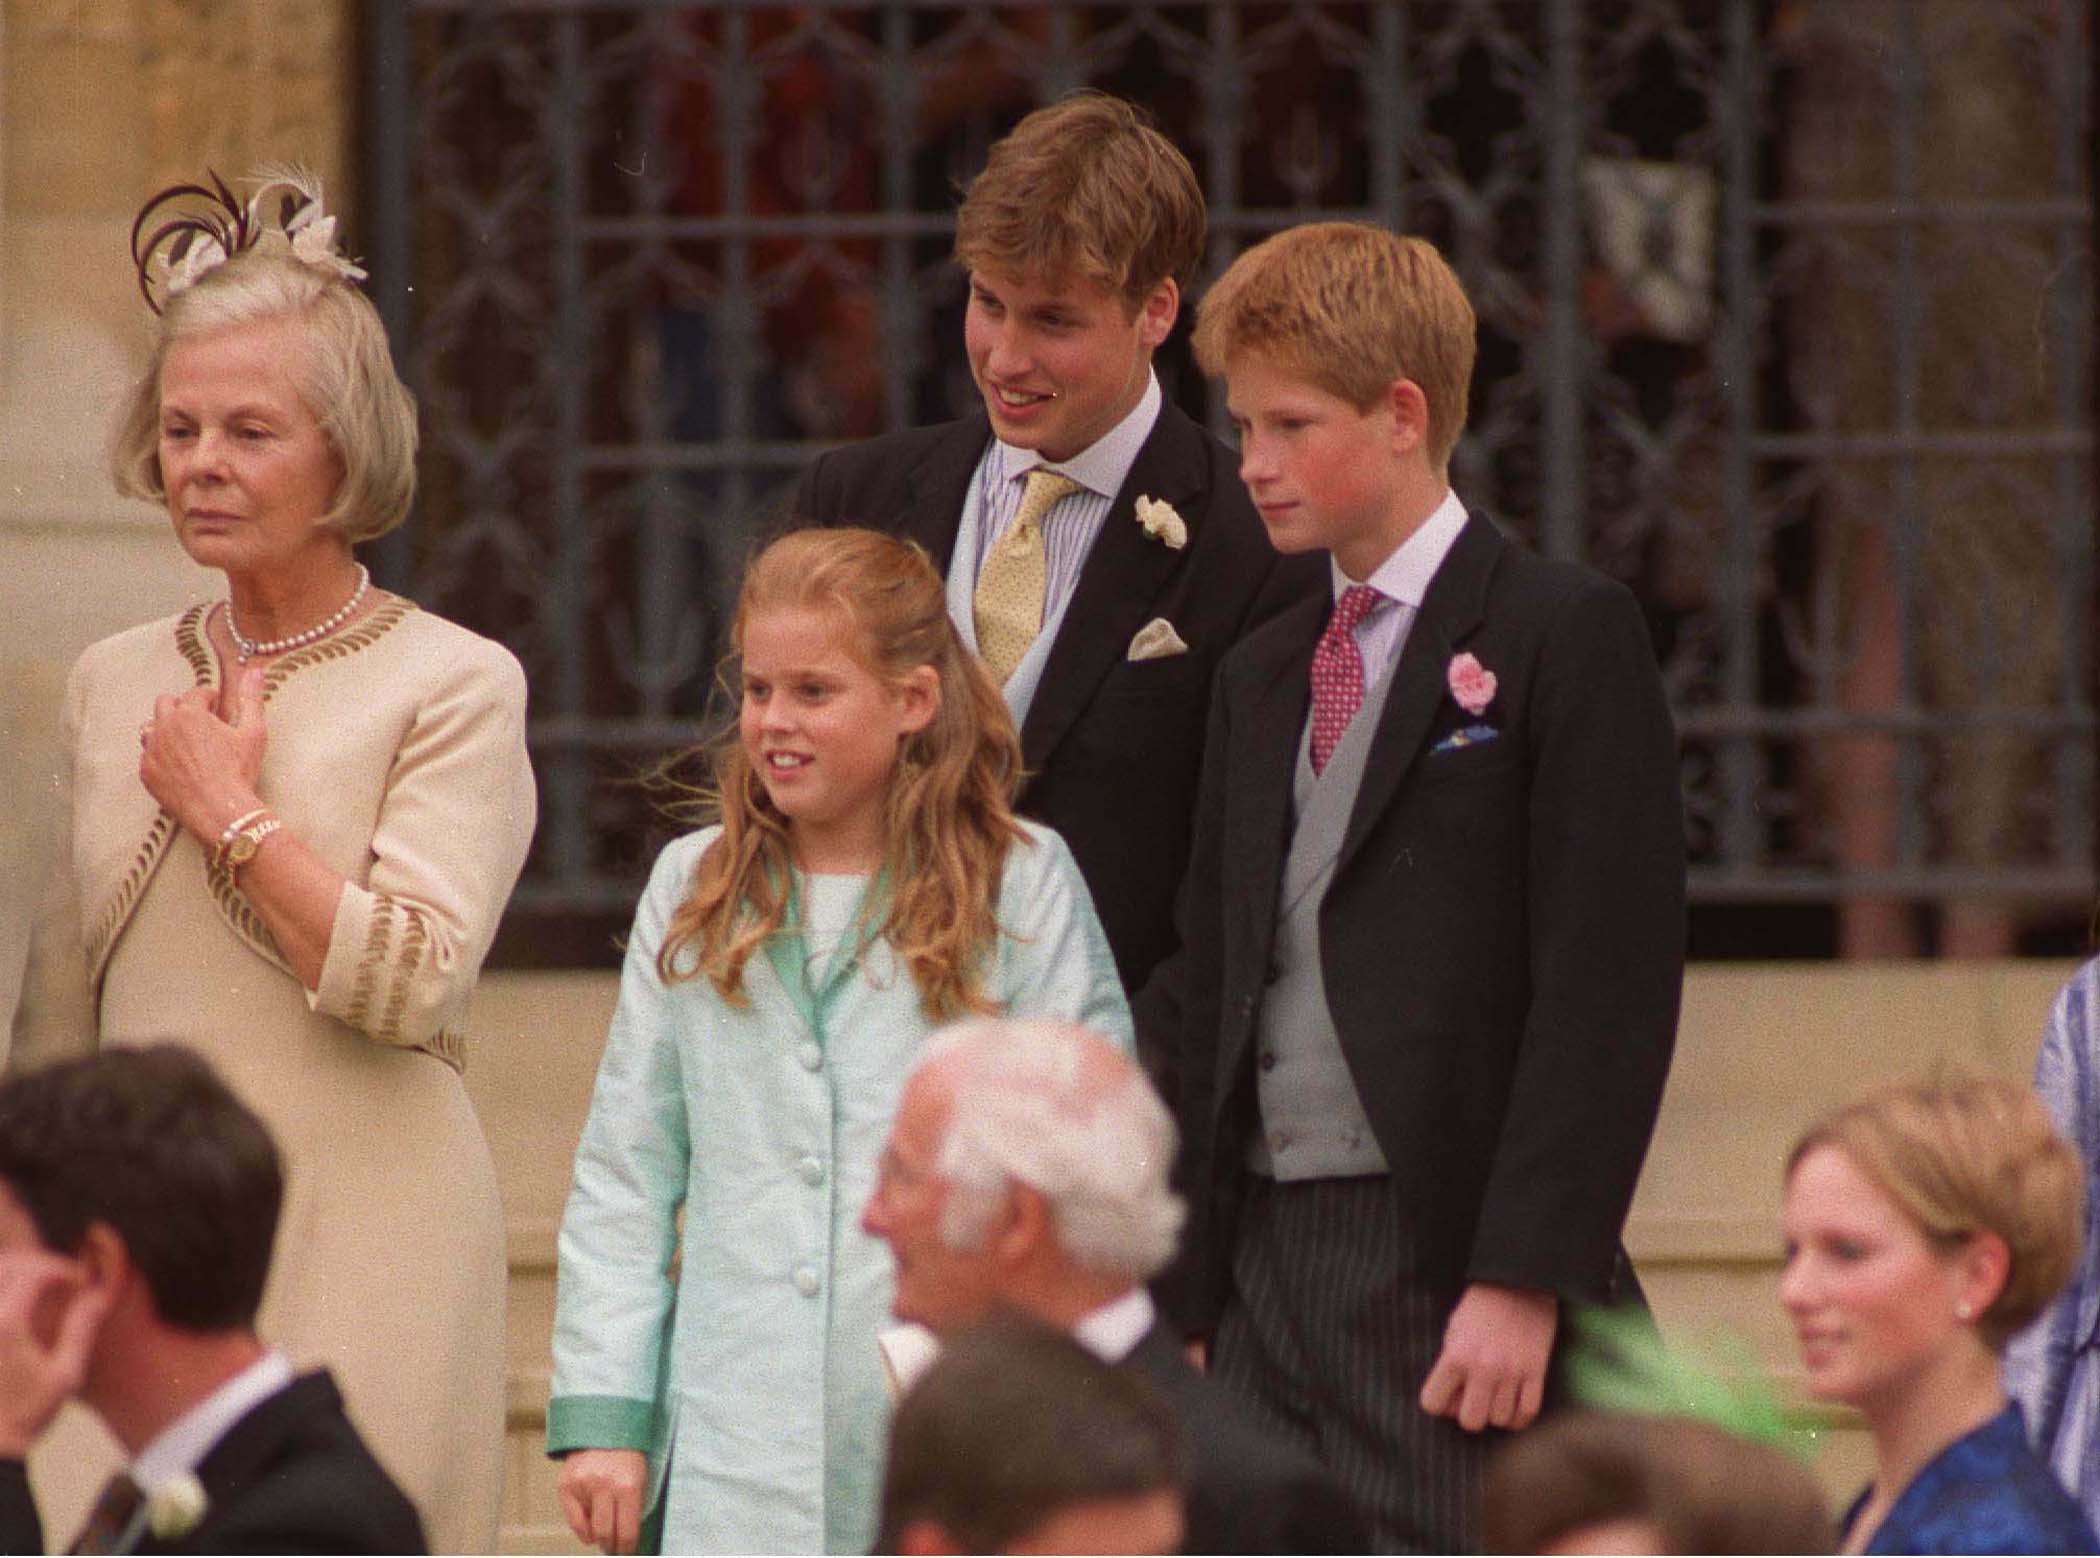 принц едвард син королева єлизавета II весілля дружиня Софі Вессекська